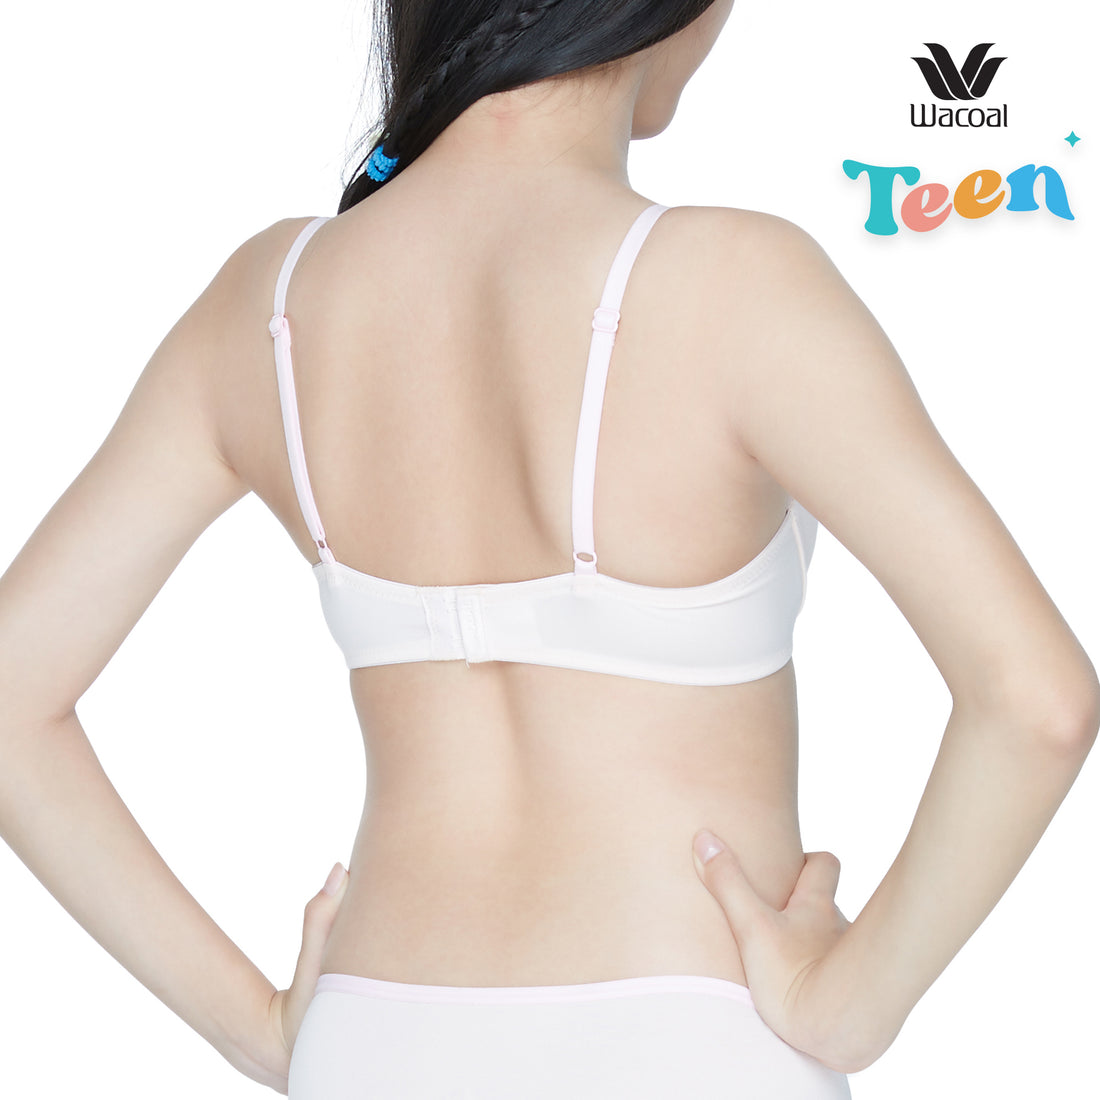 Wacoal Teen Bikini Panty Underwear for Teens Model MUT305 White